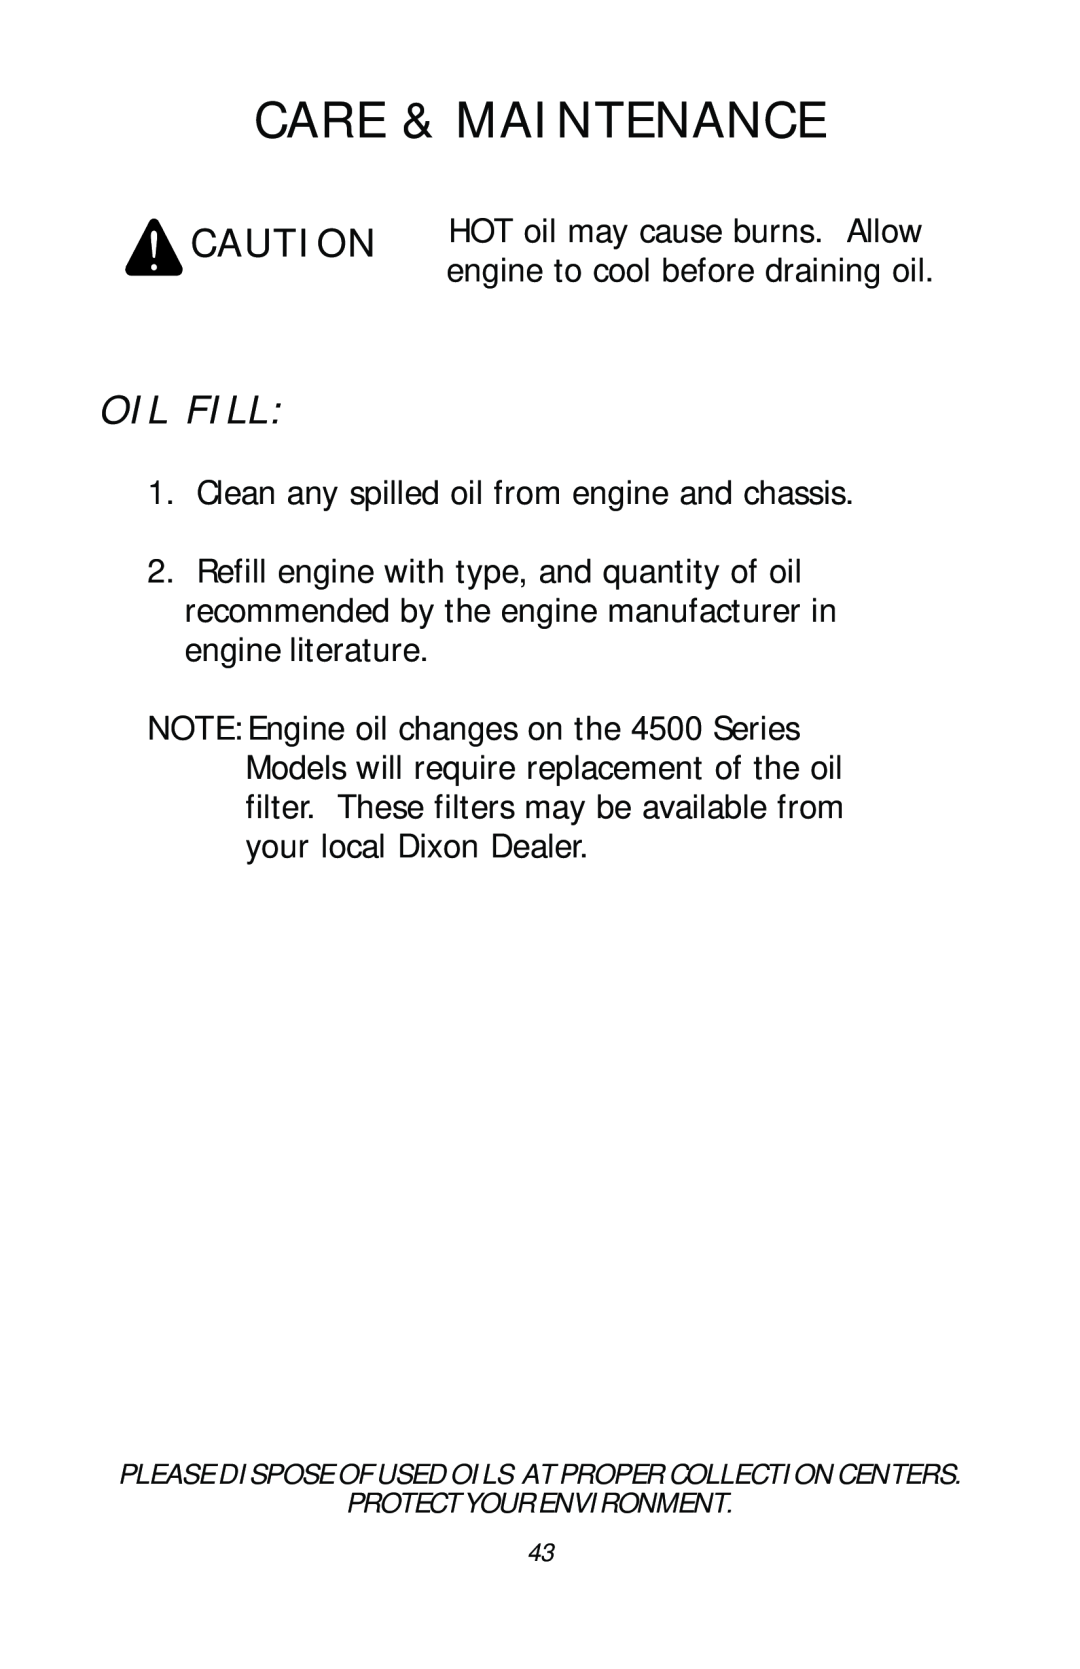 Dixon 13782-0503, ZTR 4516, ZTR 4515, ZTR 4518 manual Oil Fill, Care & Maintenance 